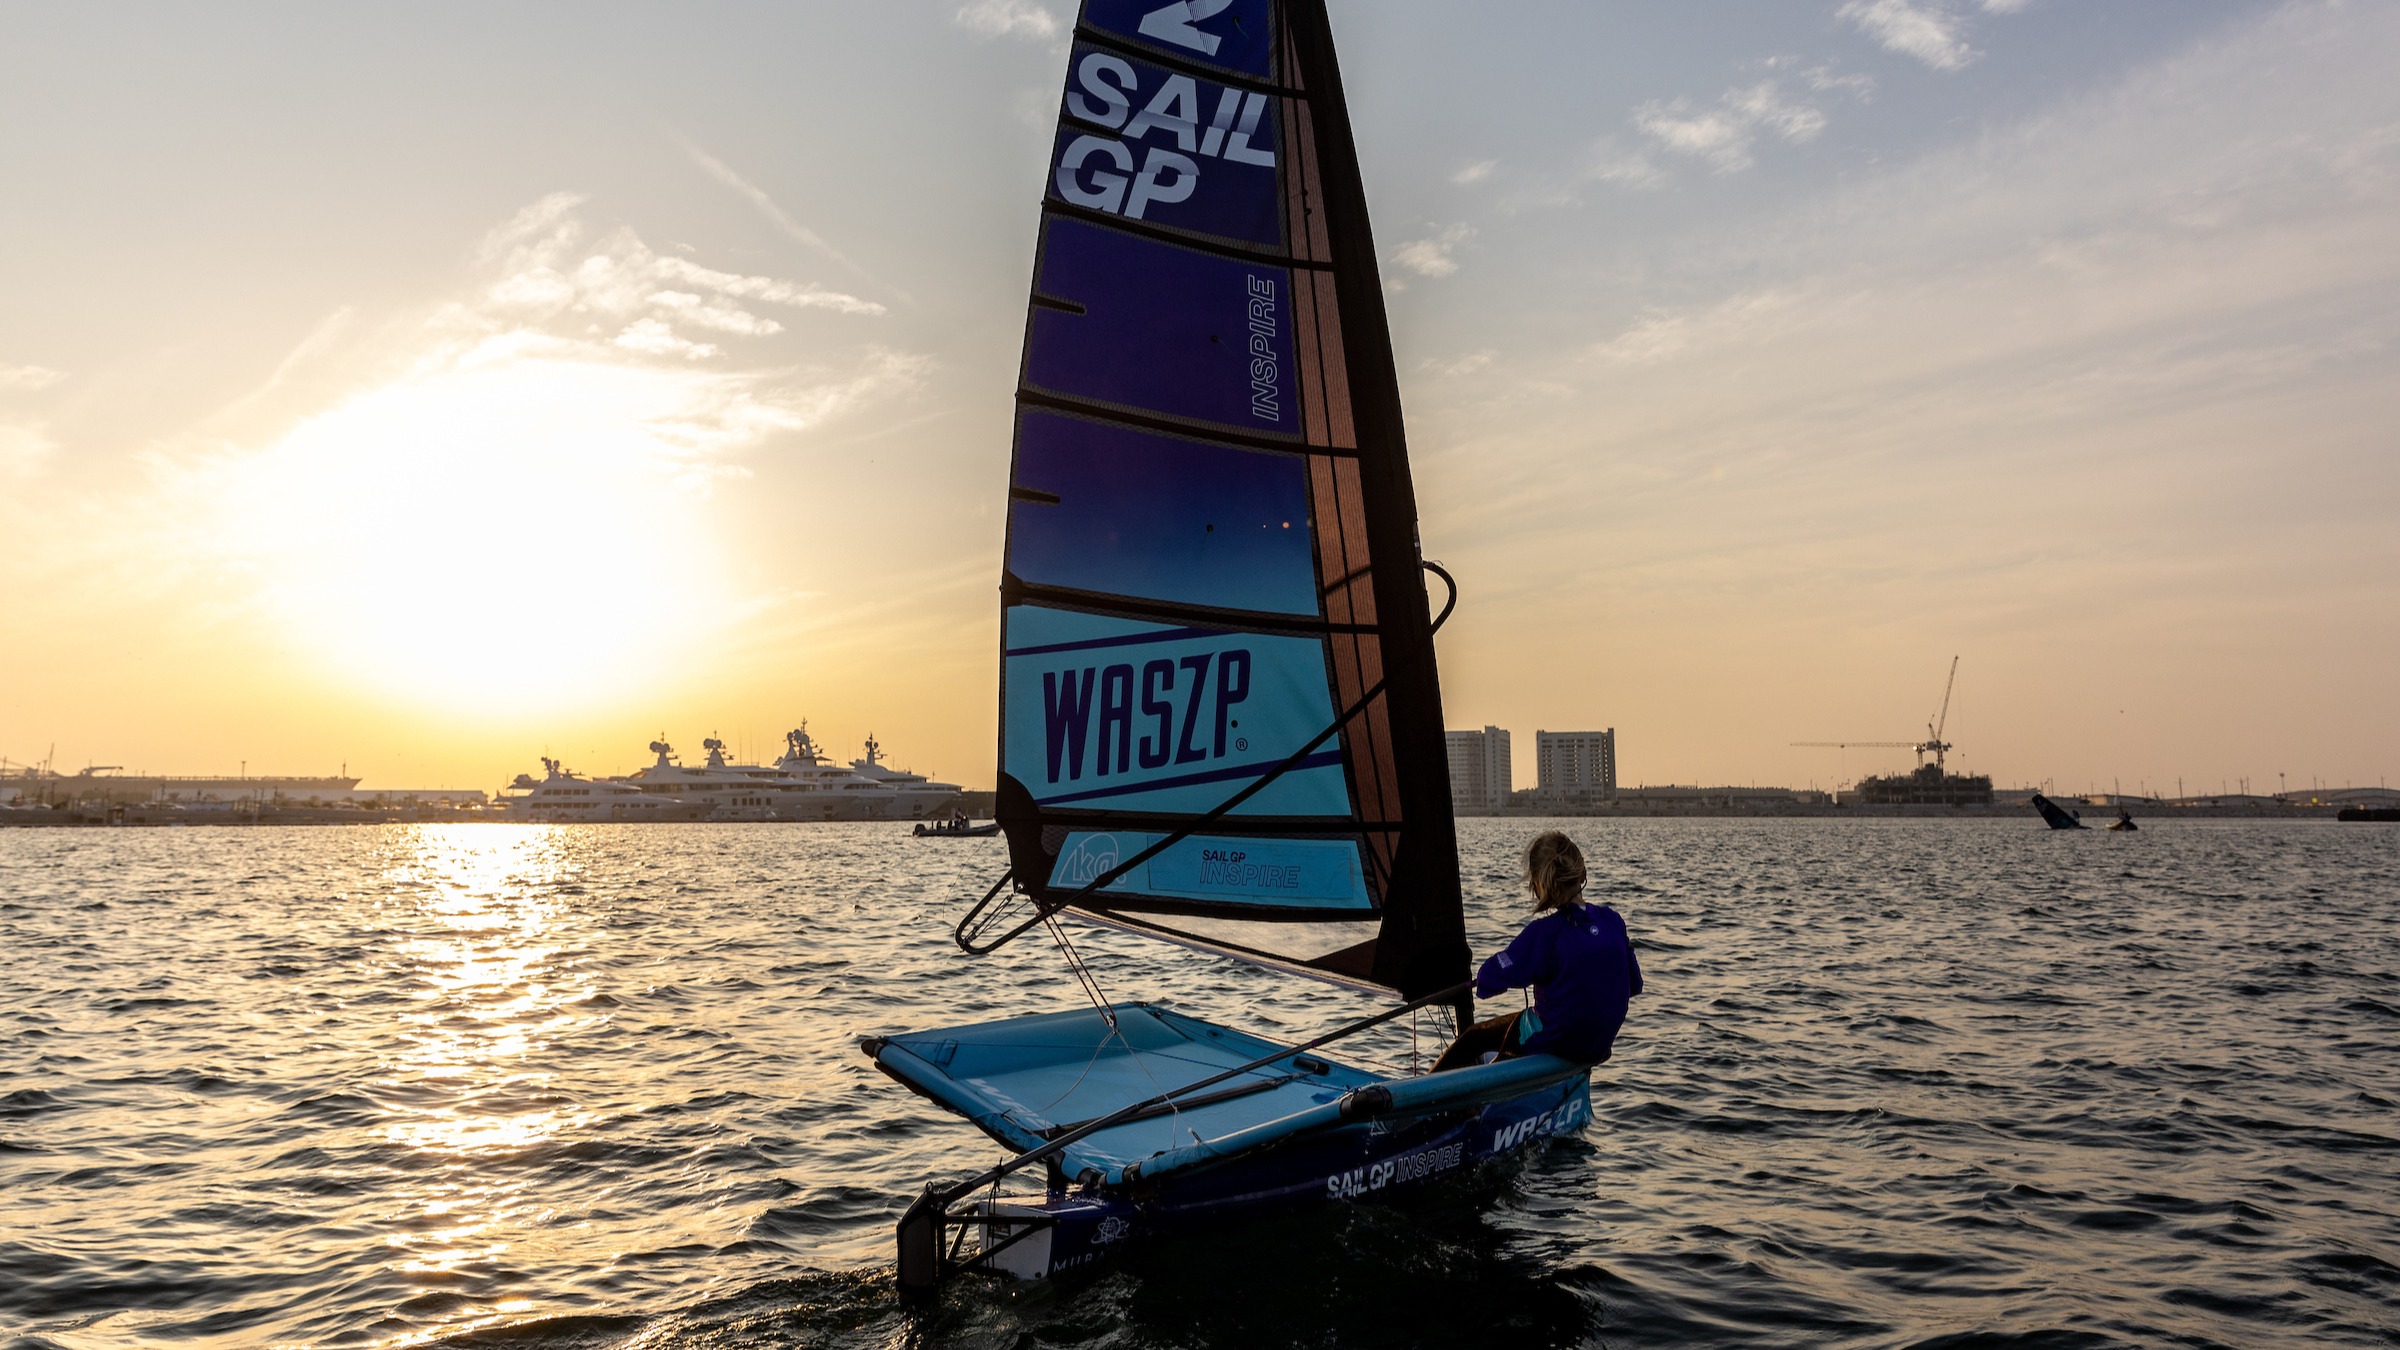 Season 4 // WASZP sailor in Dubai ahead of Emirates Dubai Sail Grand Prix